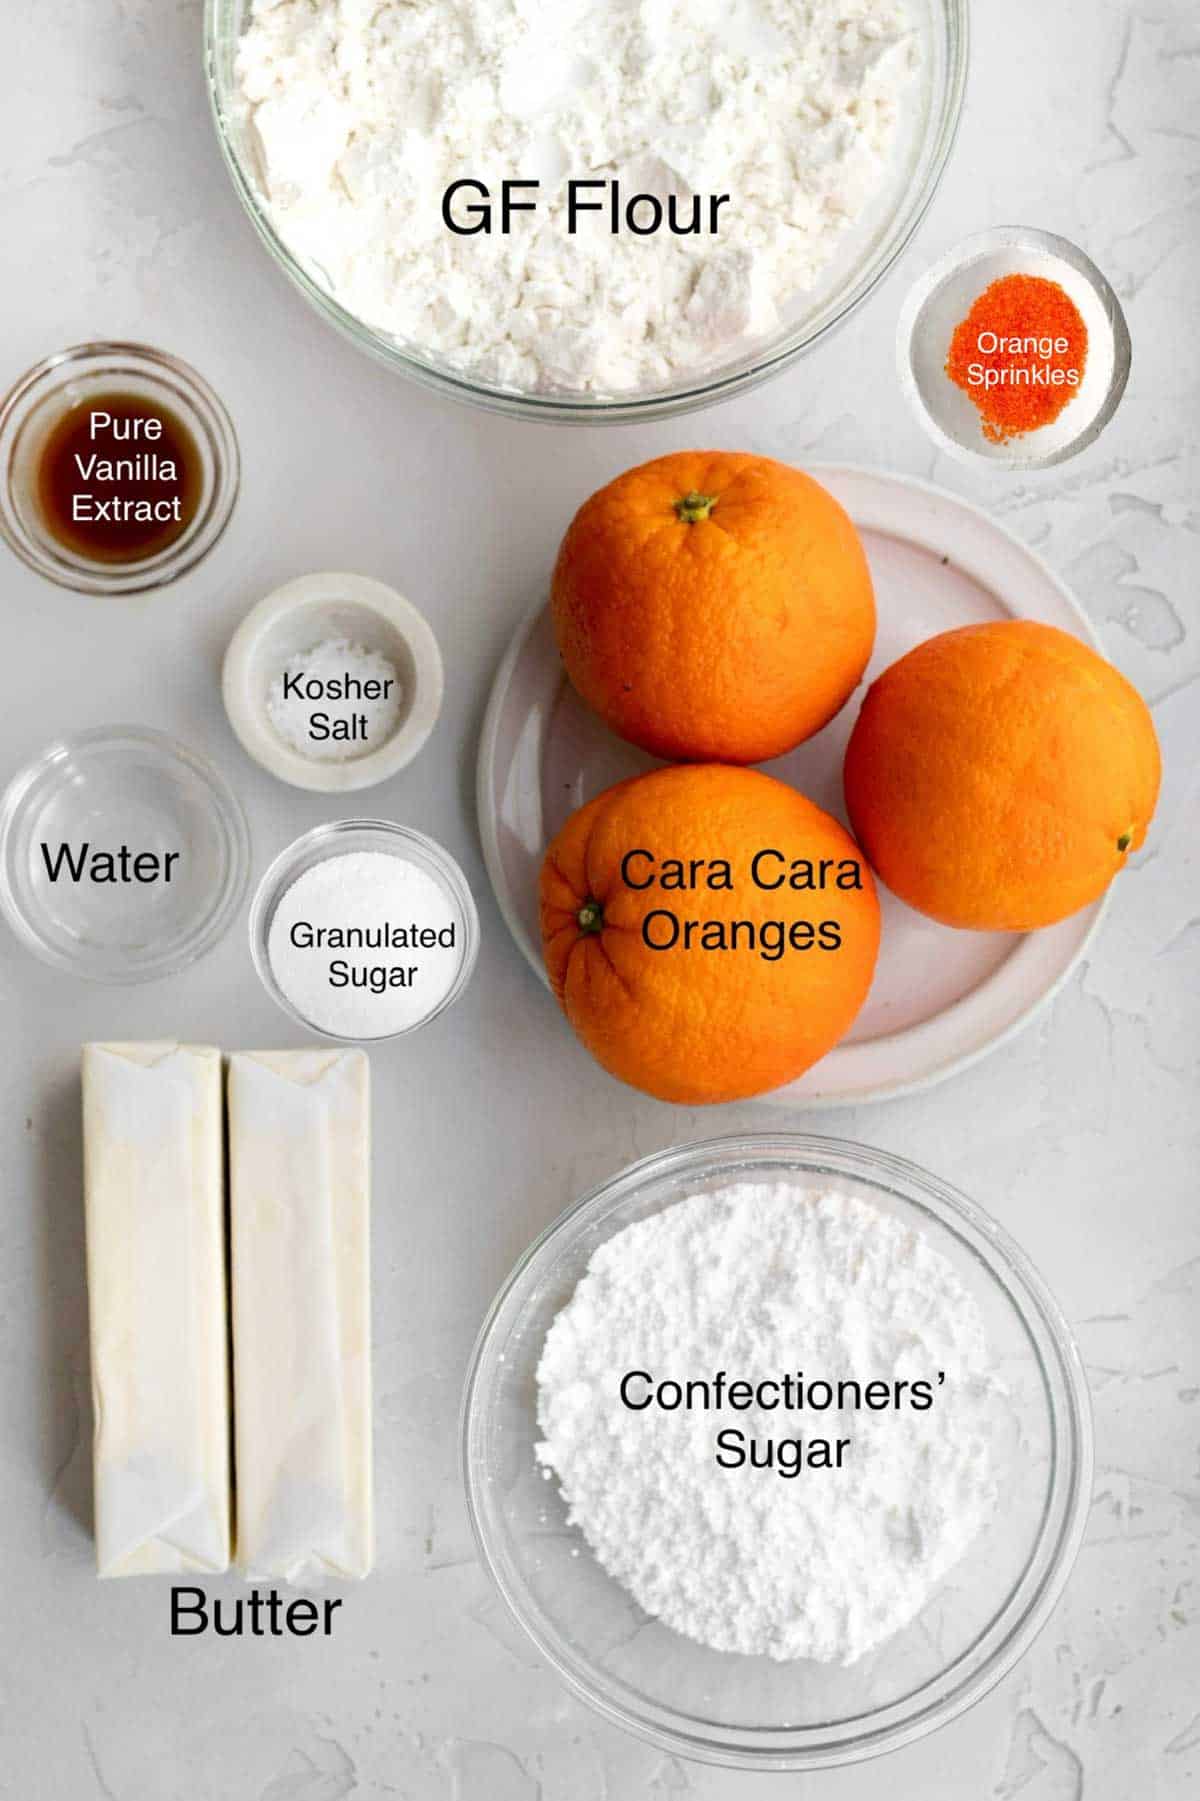 Gluten free flour, pure vaniila extract, orange sprinkles, cara cara oranges, water, kosher salt, granulated sugar, butter, confectioners' sugar in separate containers.